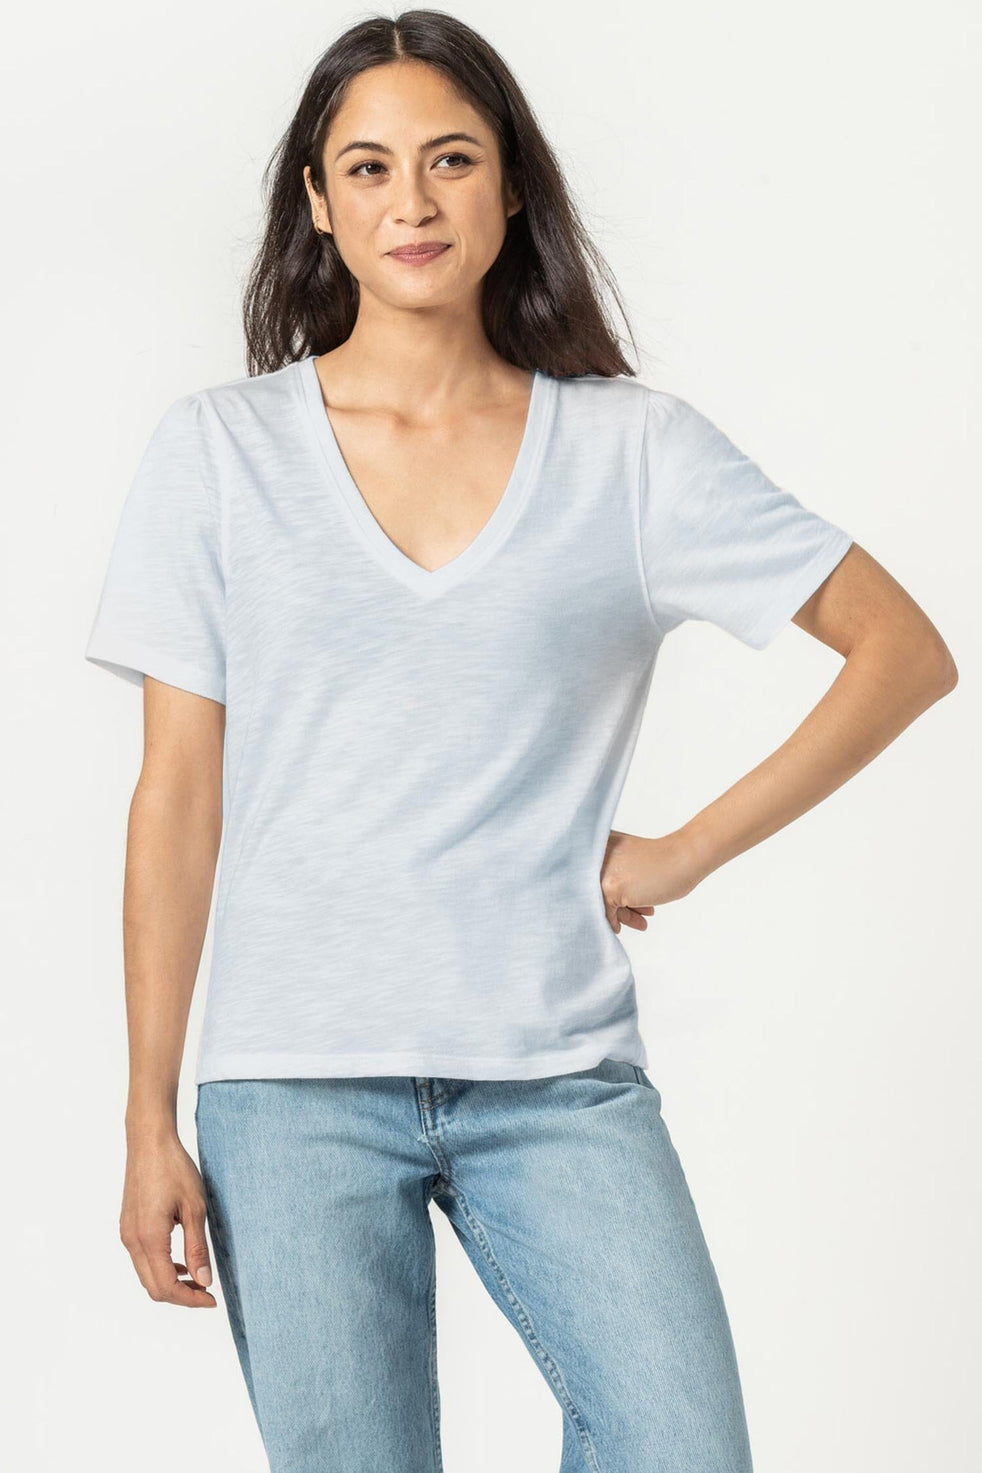 Sleeve & Shirts Long on for Tops | Cotton Women\'s Sale Women Short